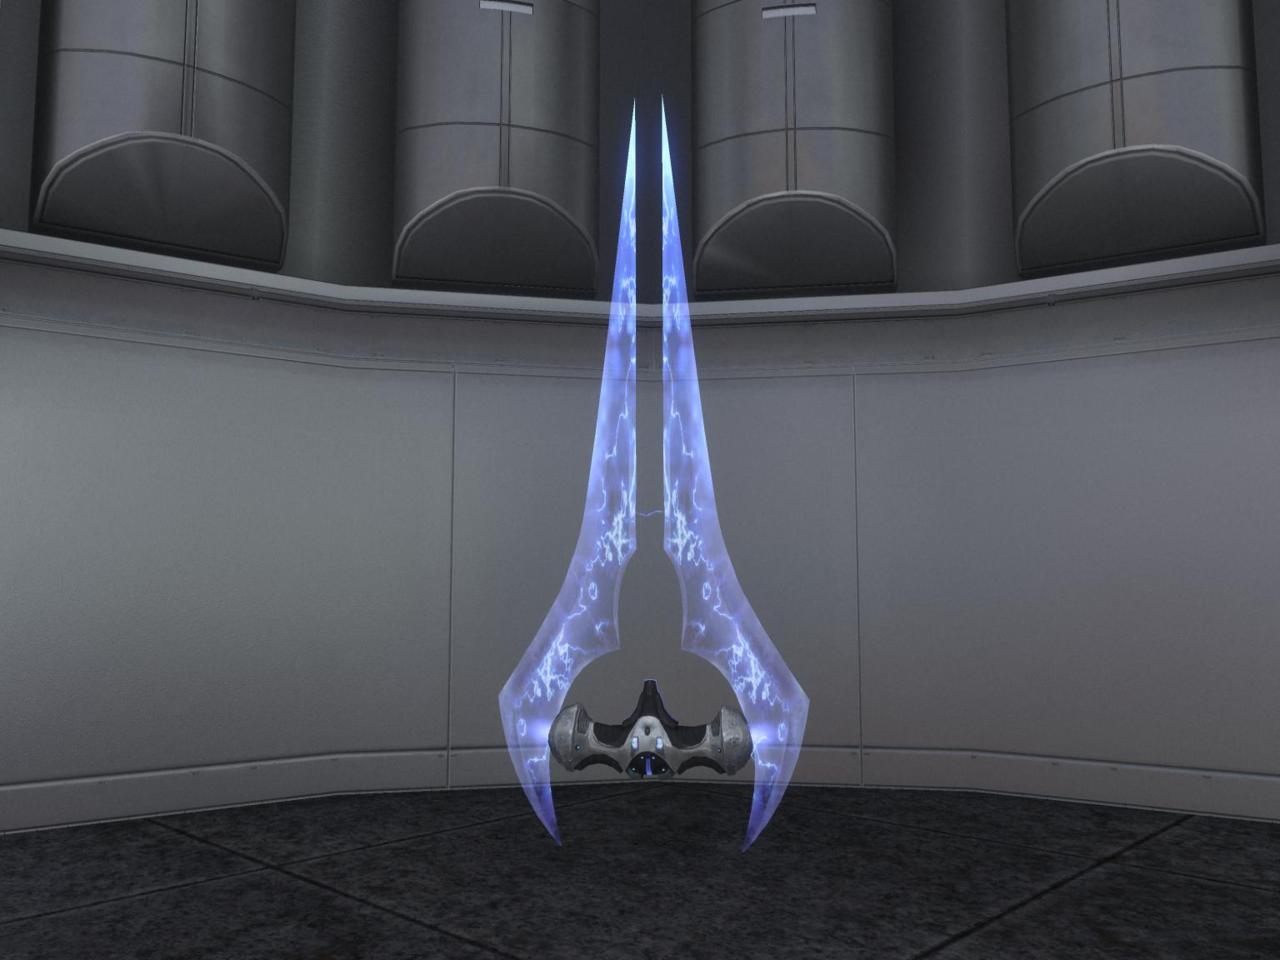 5. Energy Sword - Halo 2